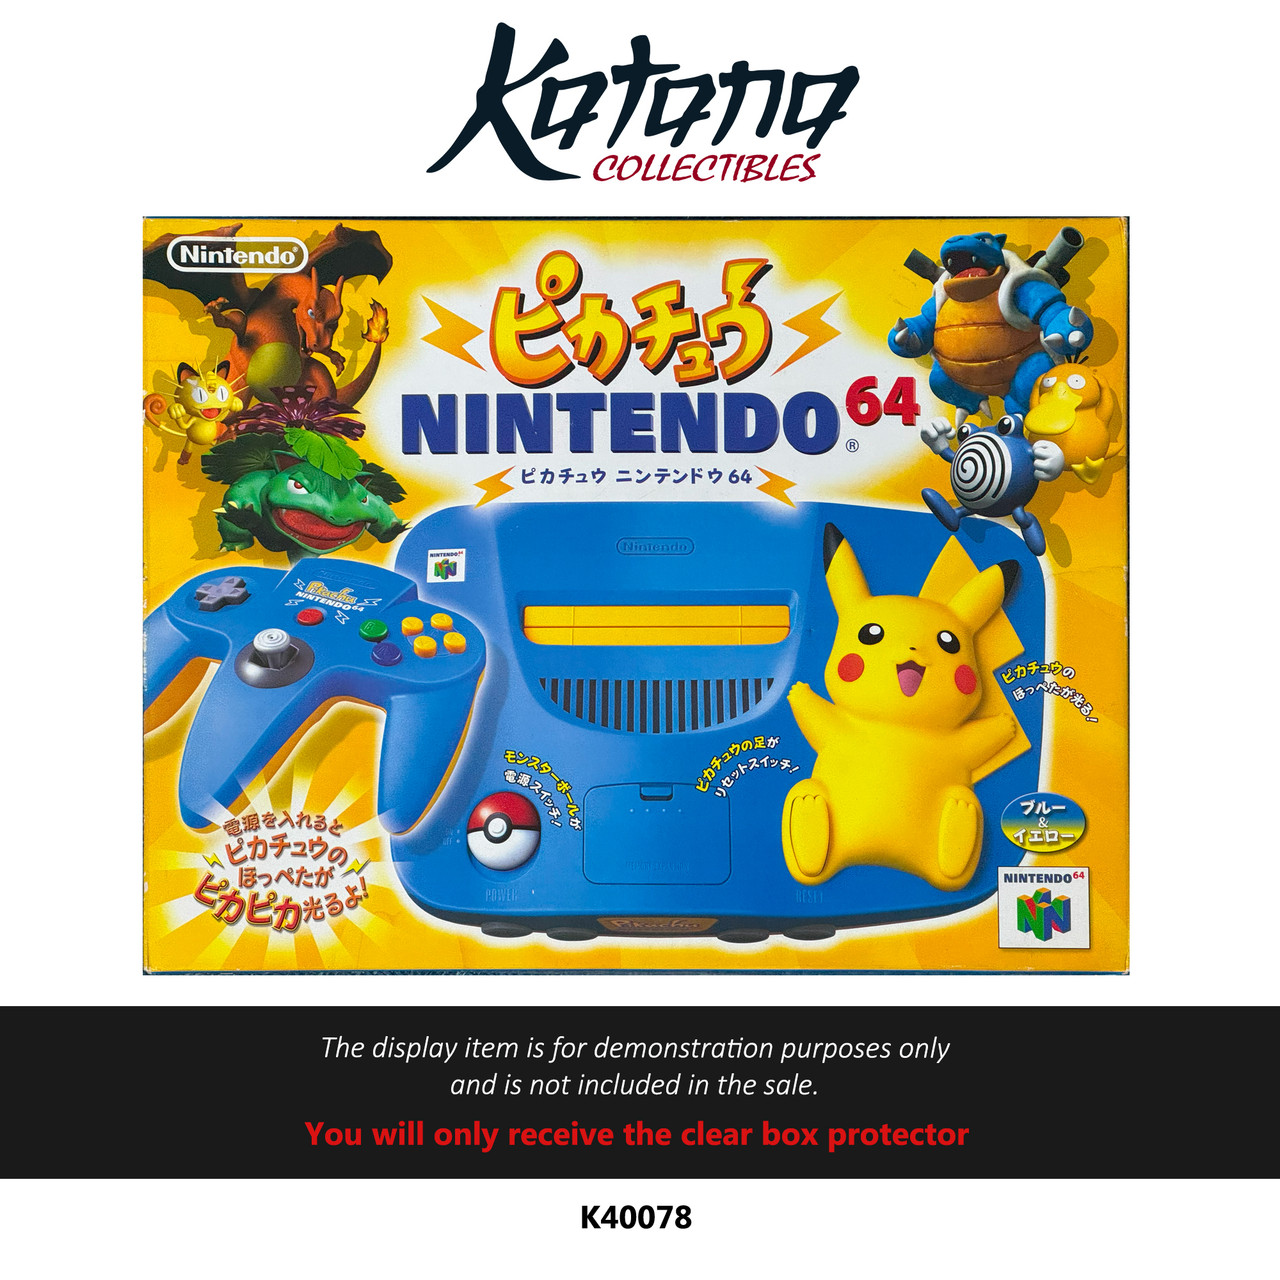 Katana Collectibles Protector For Nintendo 64 Pikachu Edition